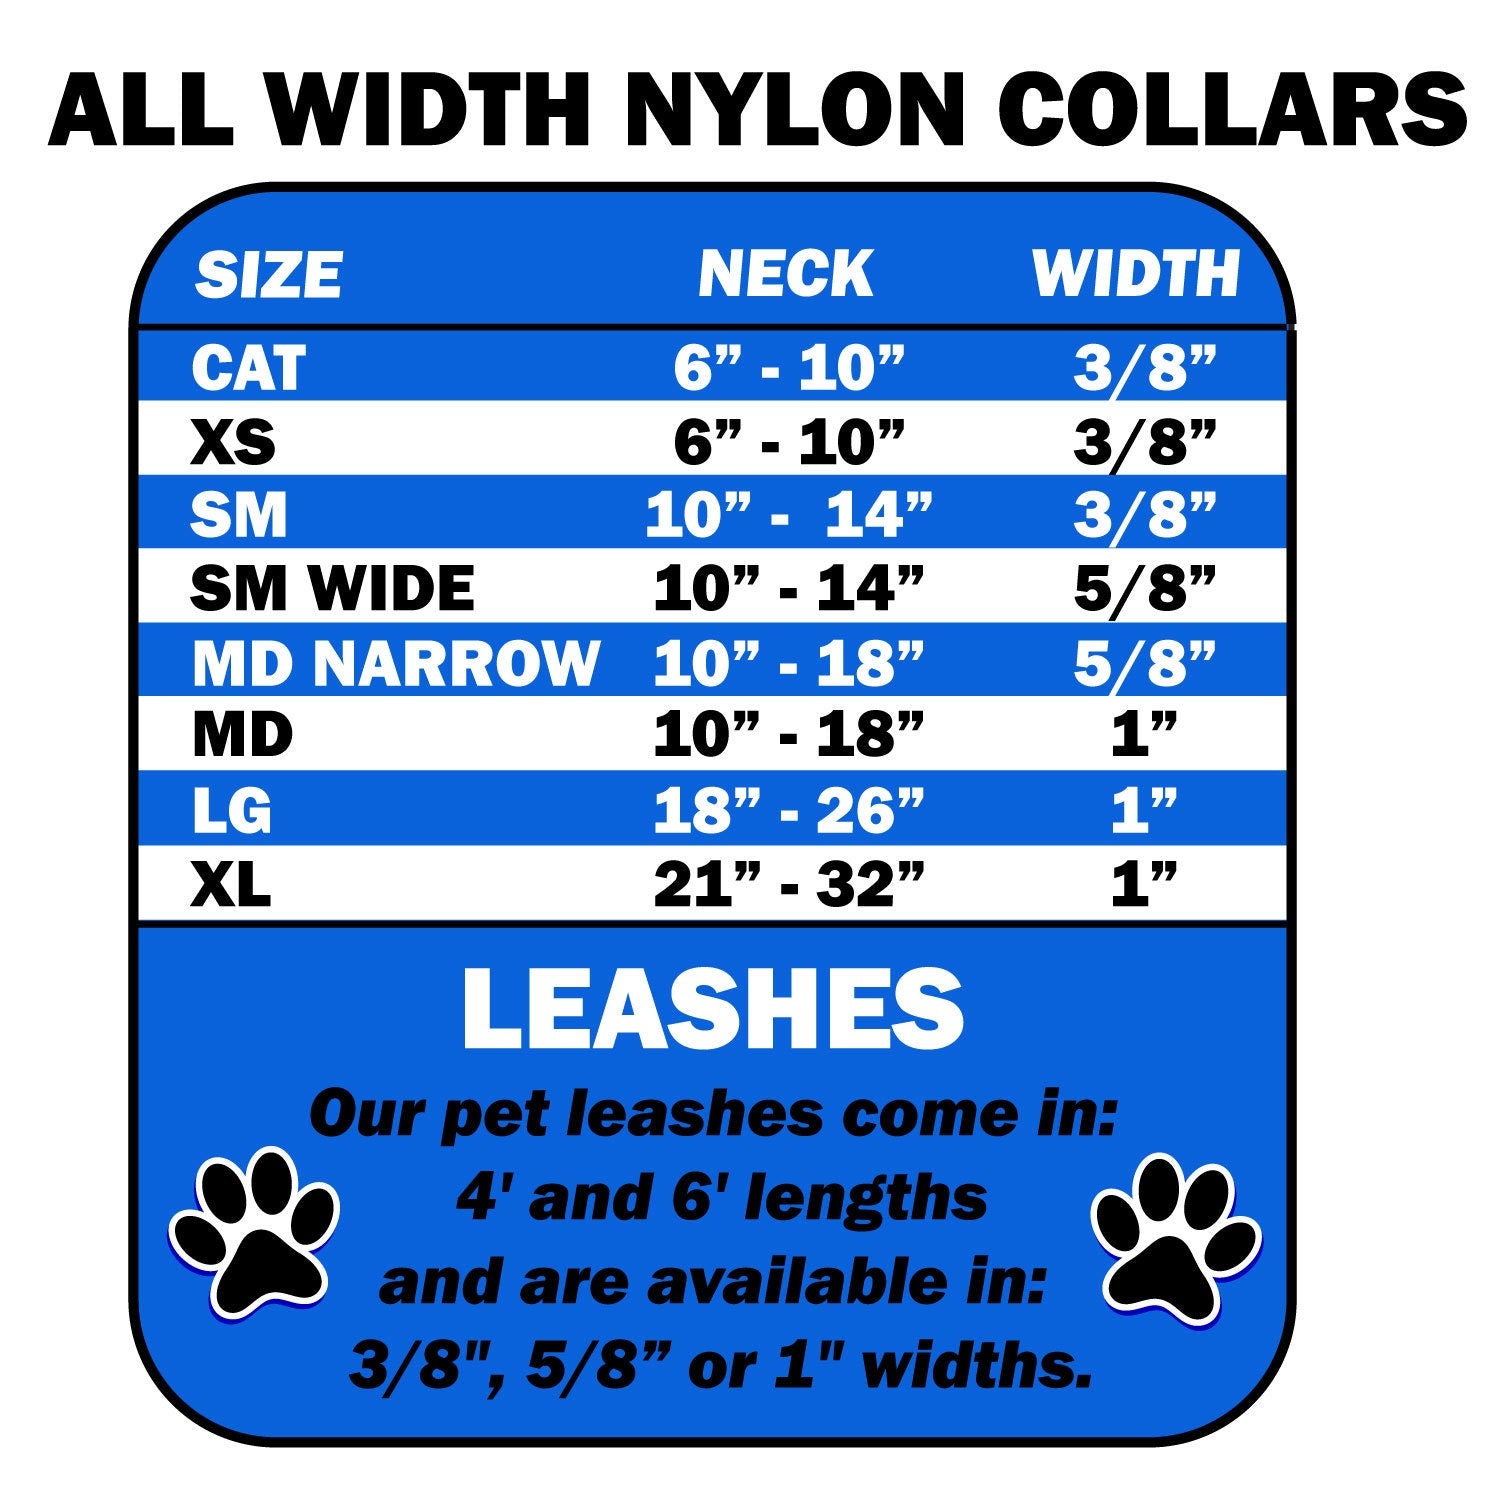 Pet Dog & Cat Nylon Collar or Leash, "Bright Owls"